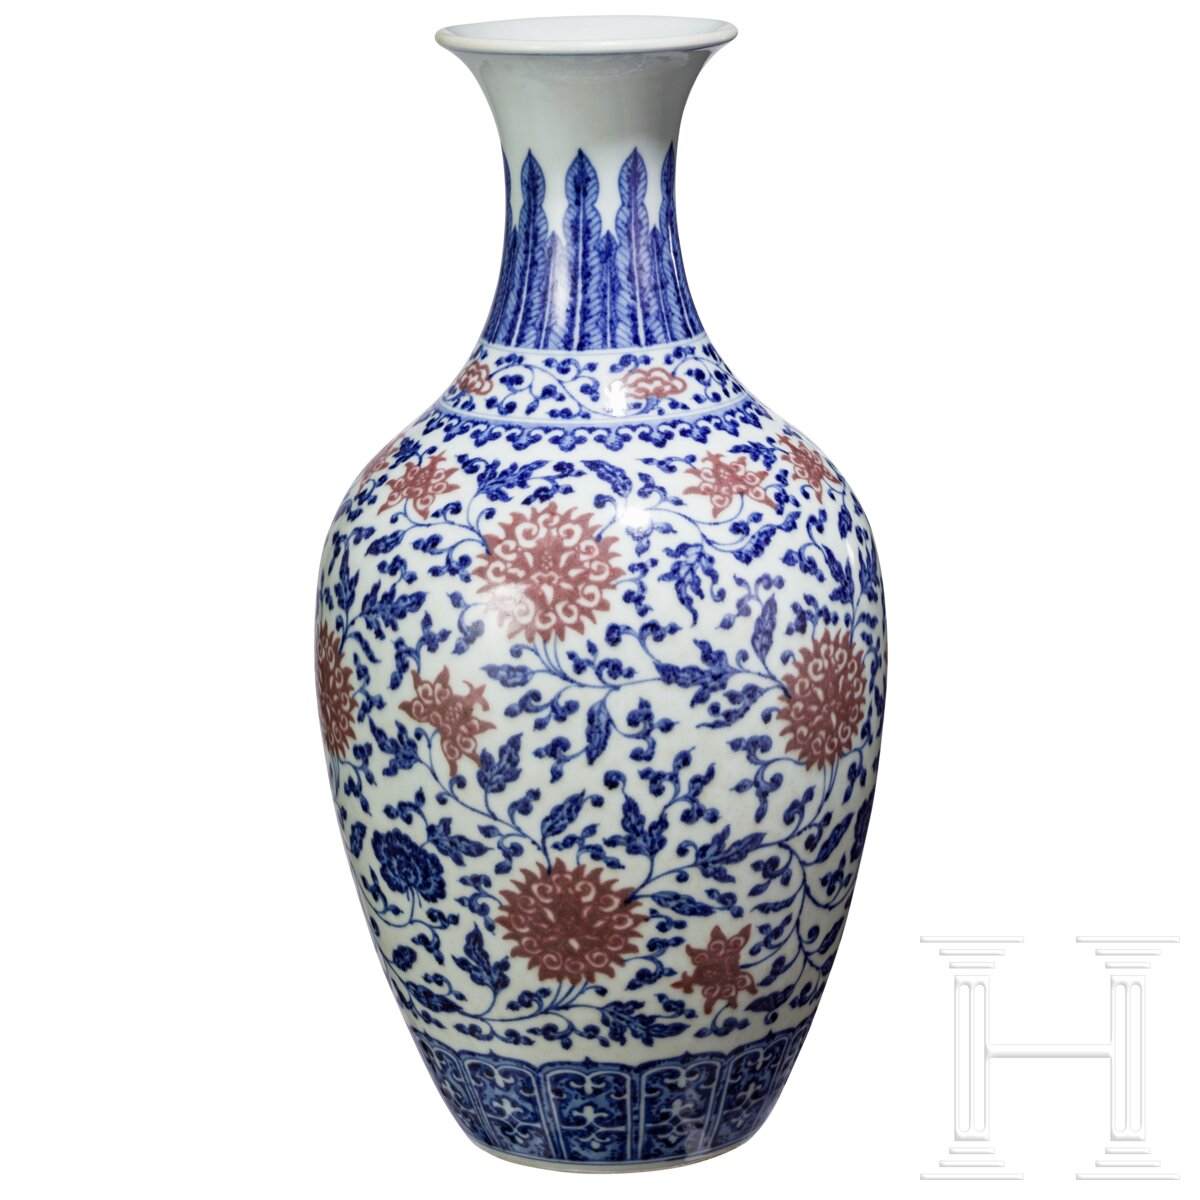 Große blau-weiße Vase mit kupferroten Lotusblüten, China, wohl Qianglong-Periode